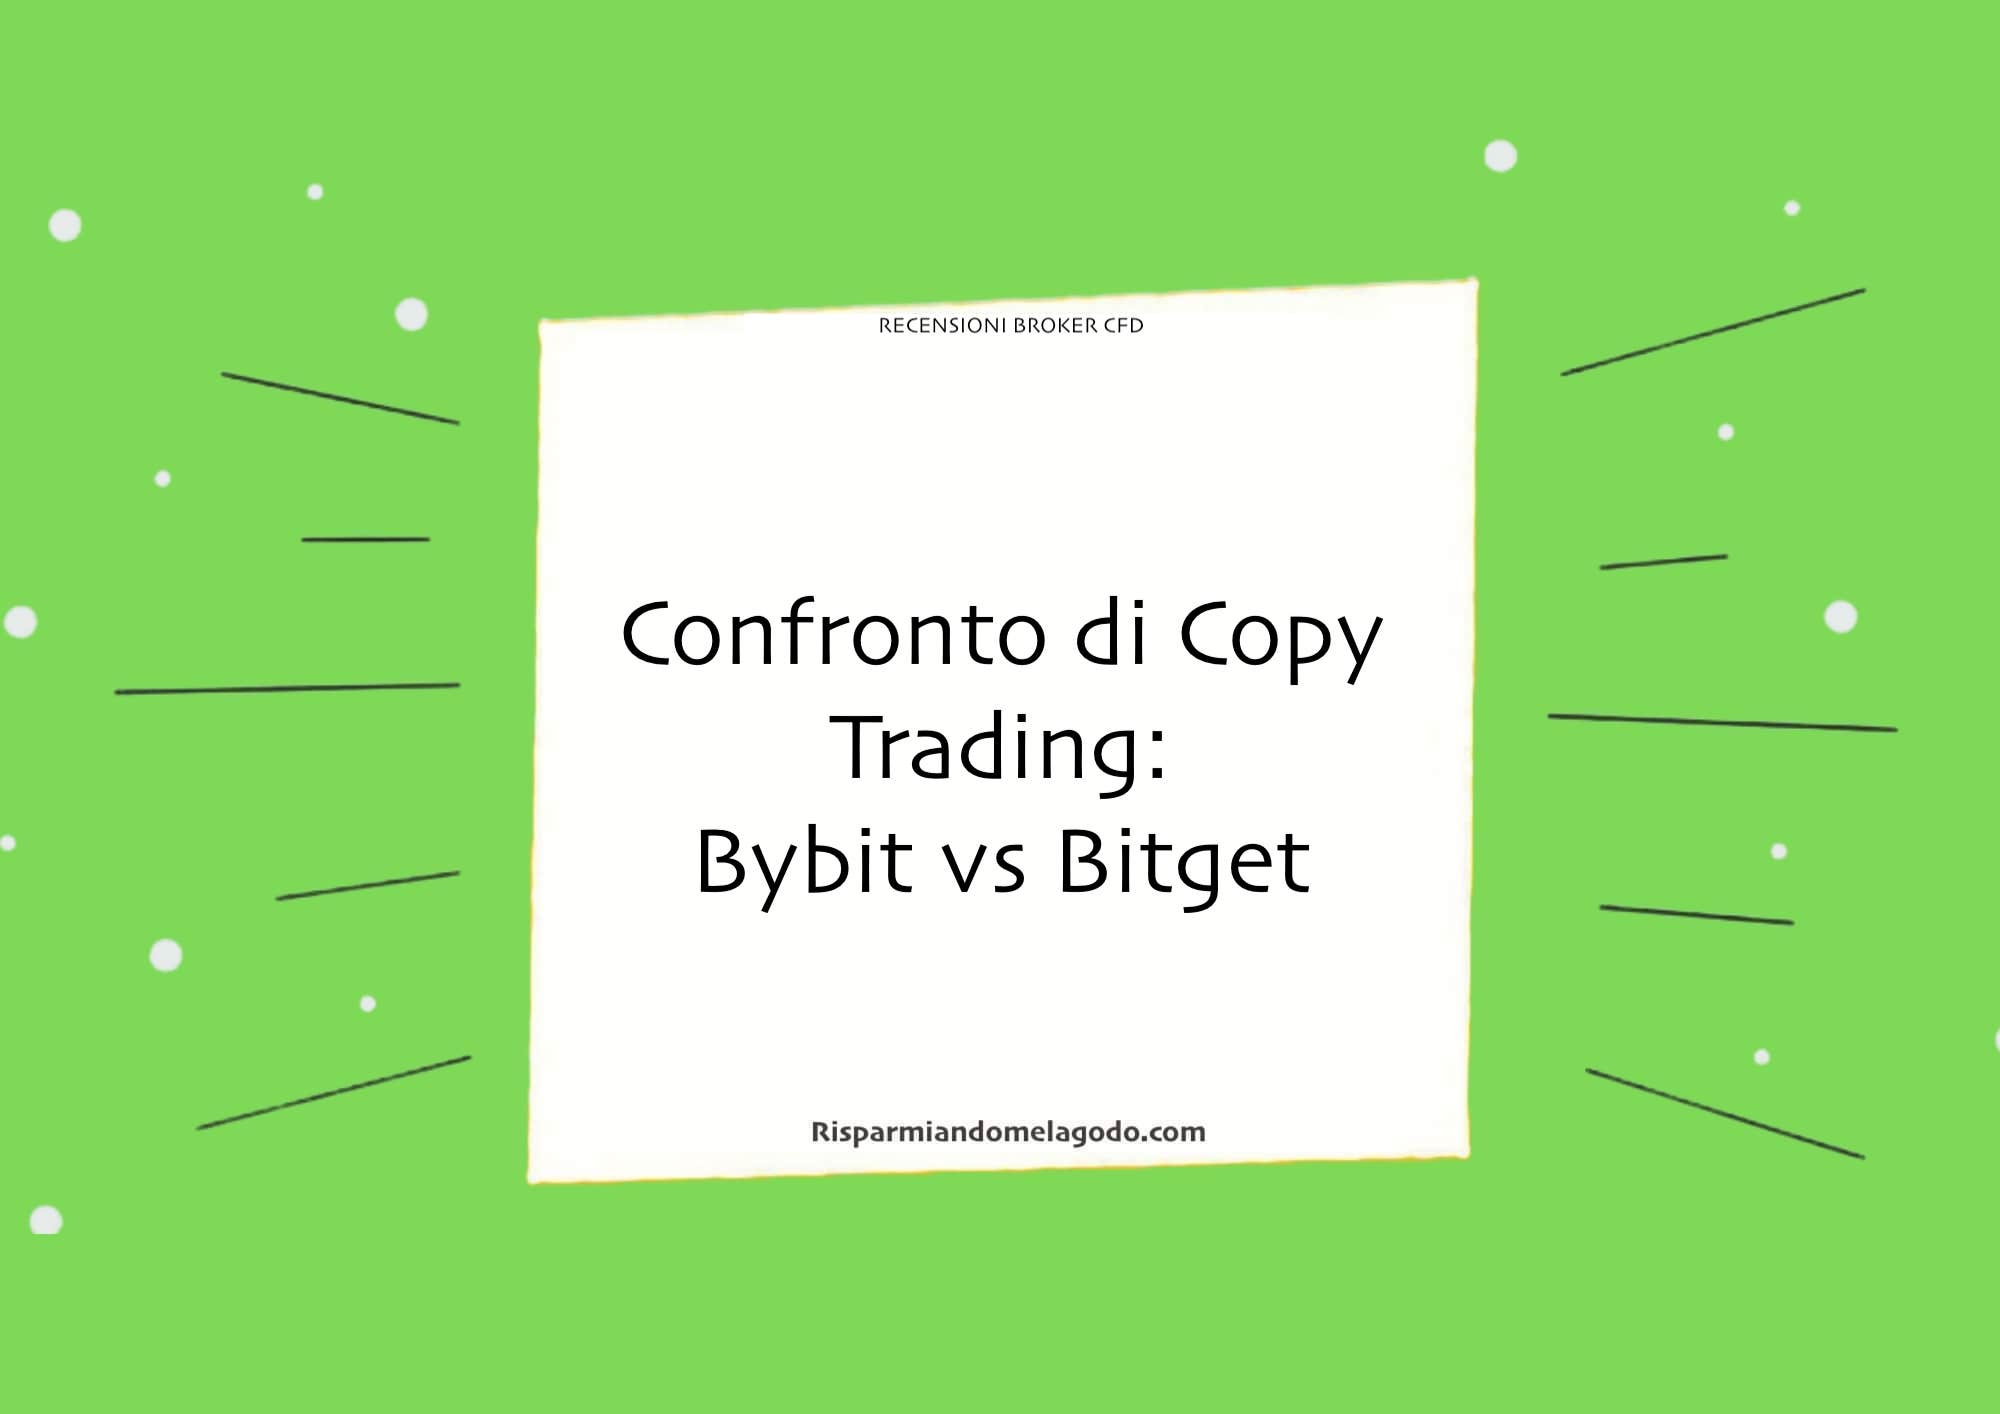 Confronto di Copy Trading: Bybit vs Bitget